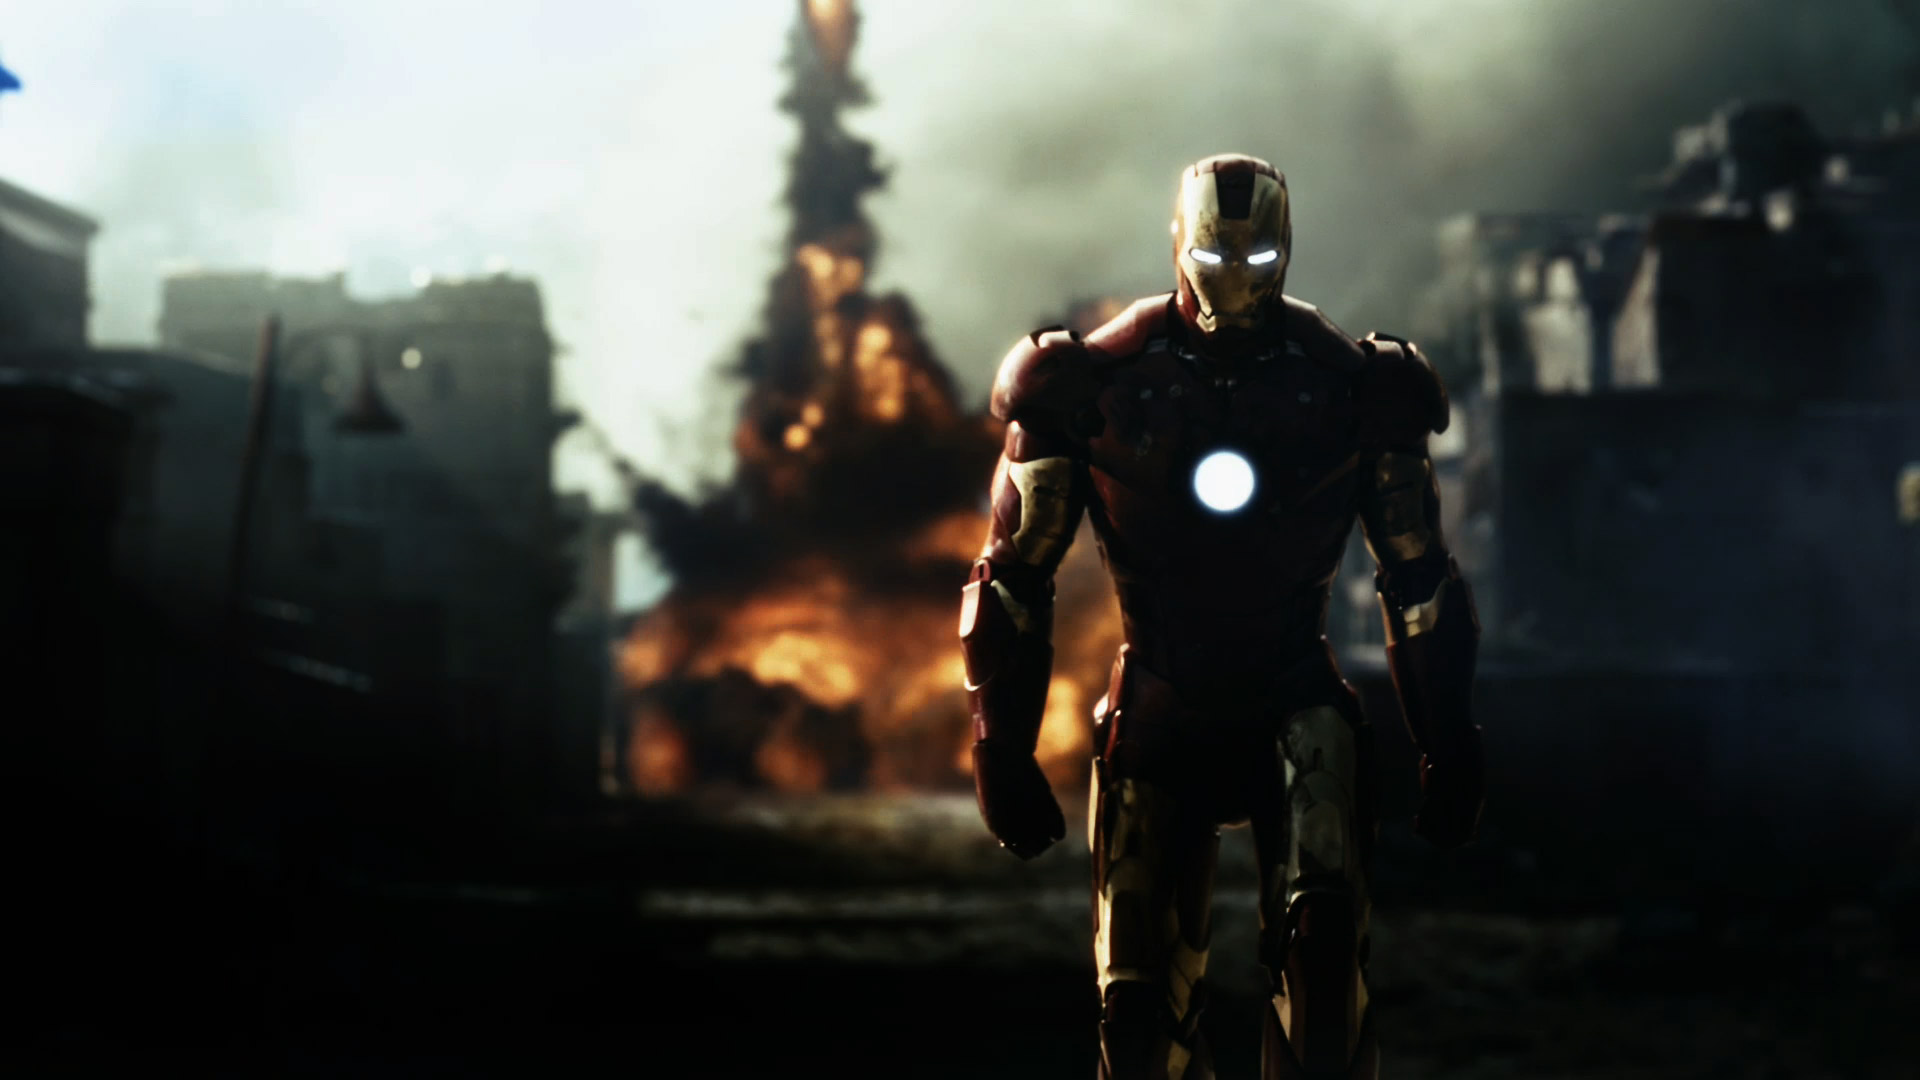 Tony Stark surrounded by advanced technology.